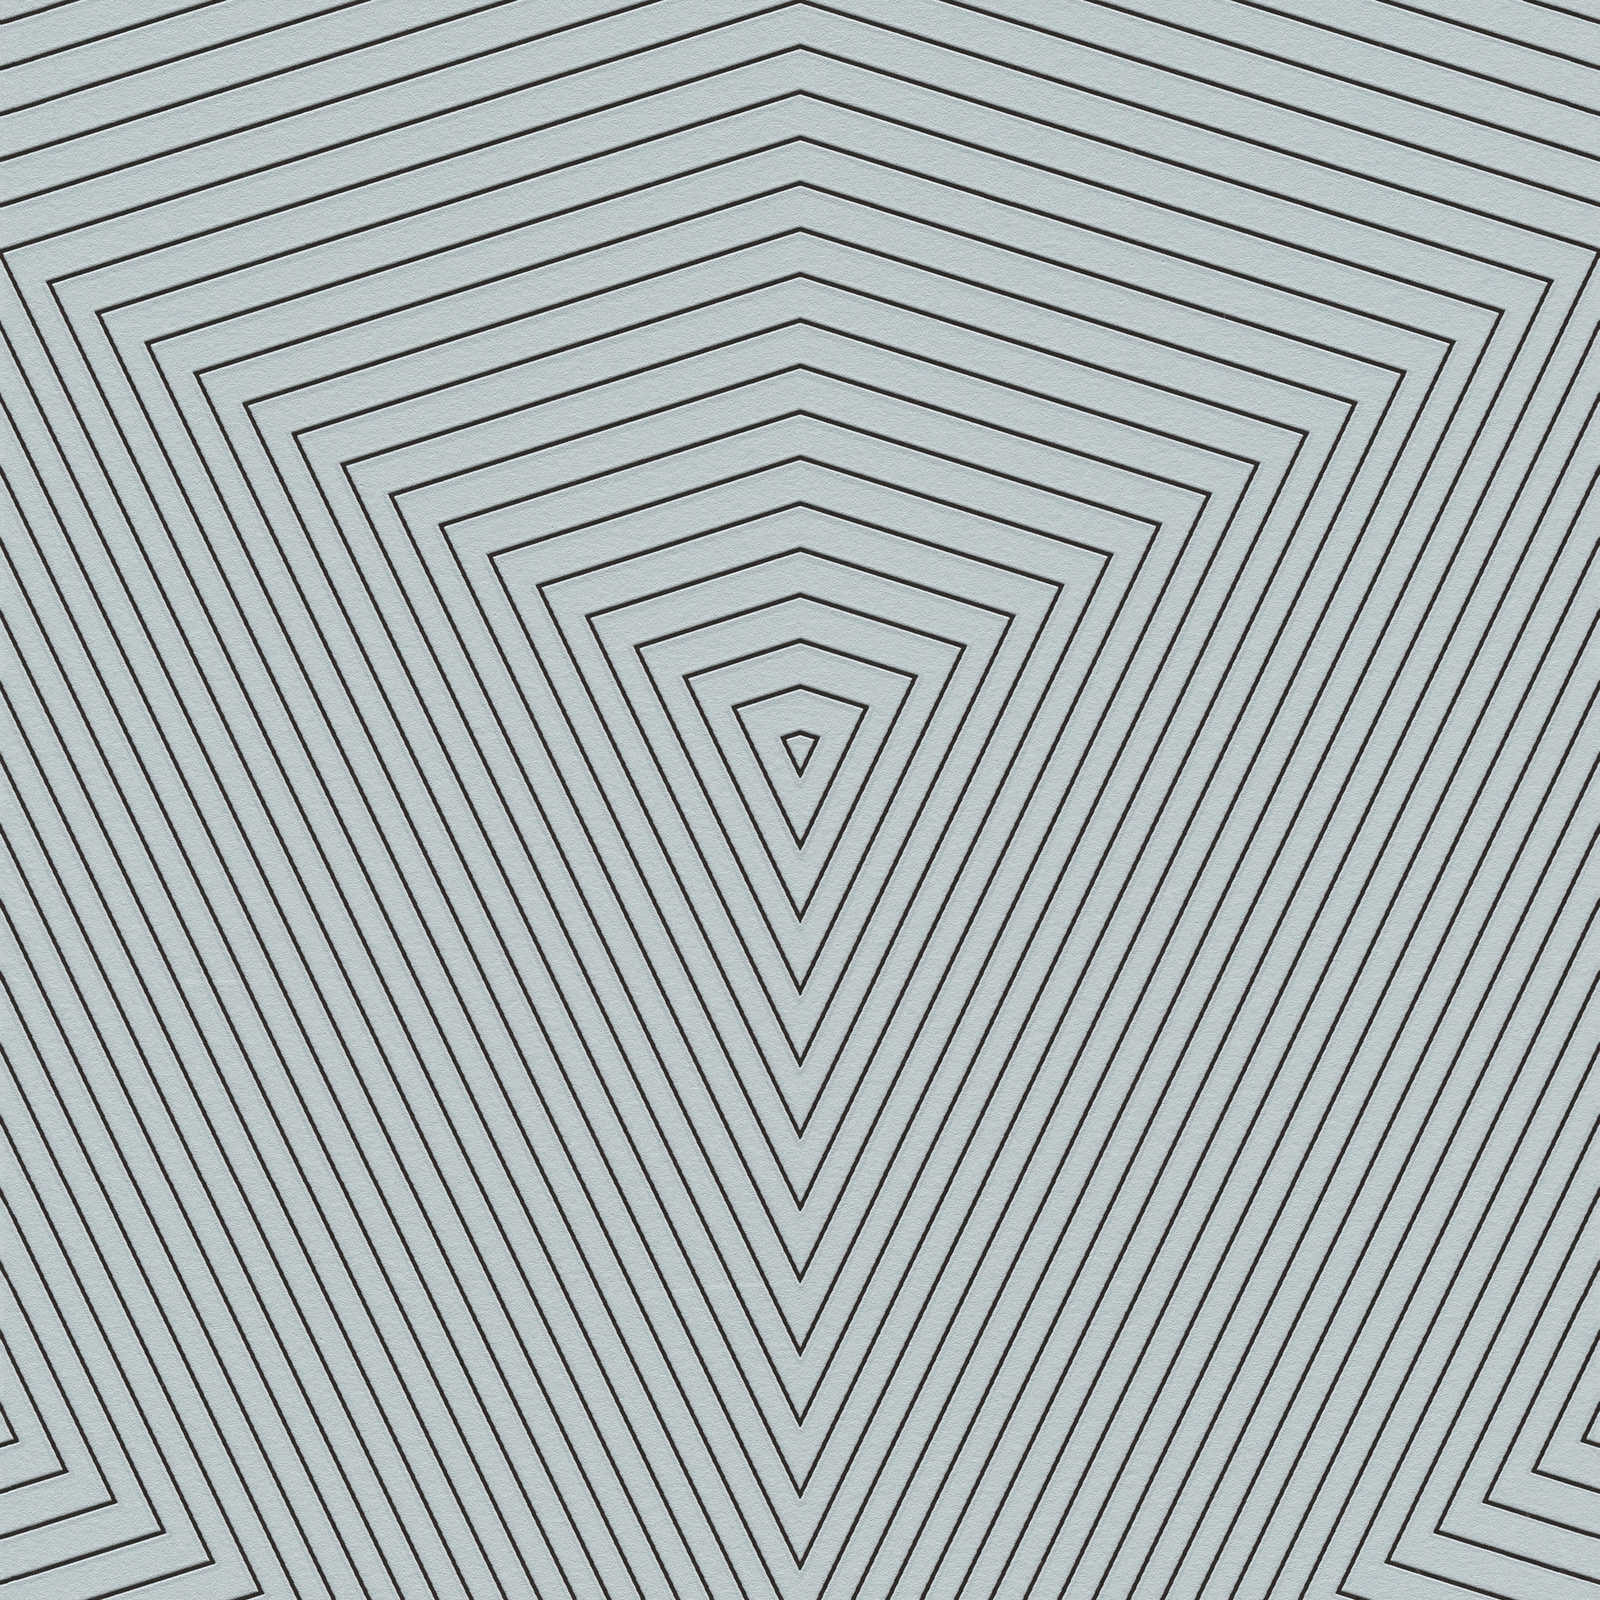 Vliestapete mit Linien Muster & Metallic-Effekt – Blau, Grau
